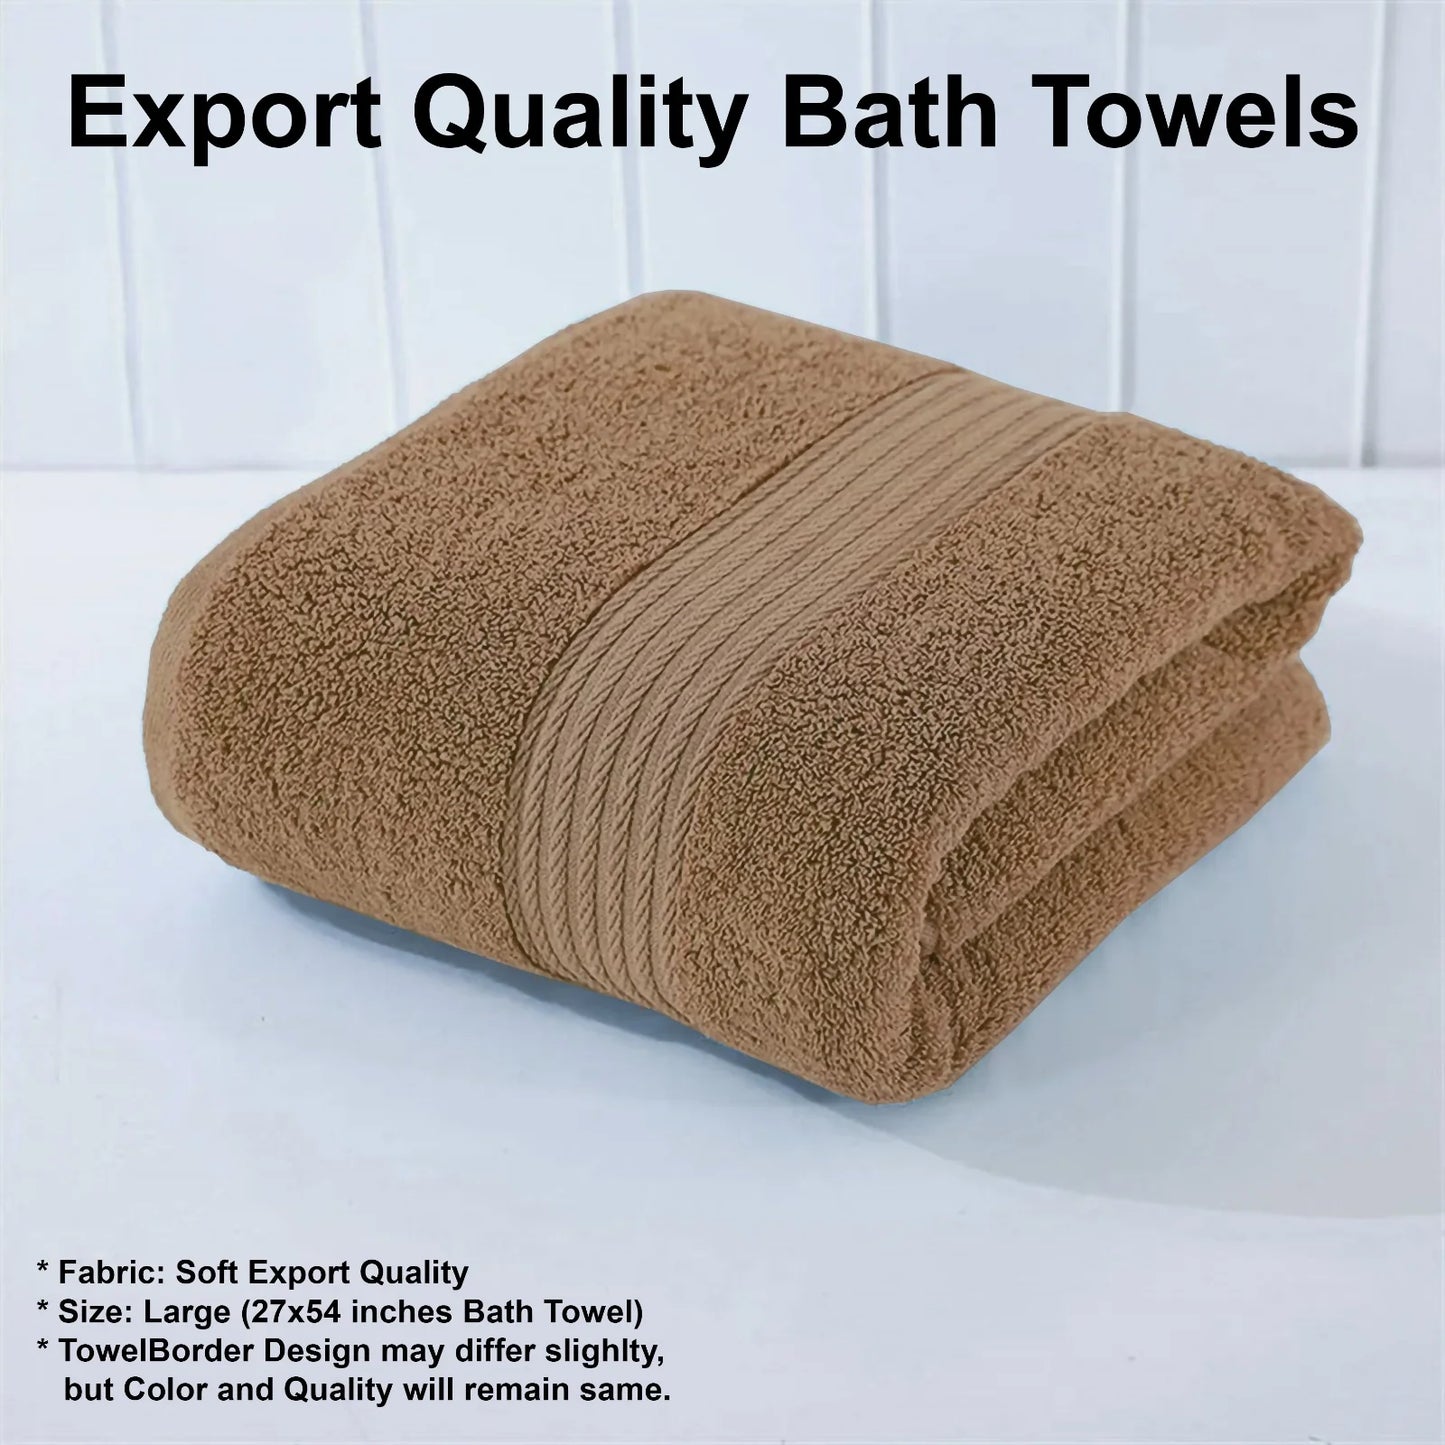 Export Quality Bath Towel - Light Brown